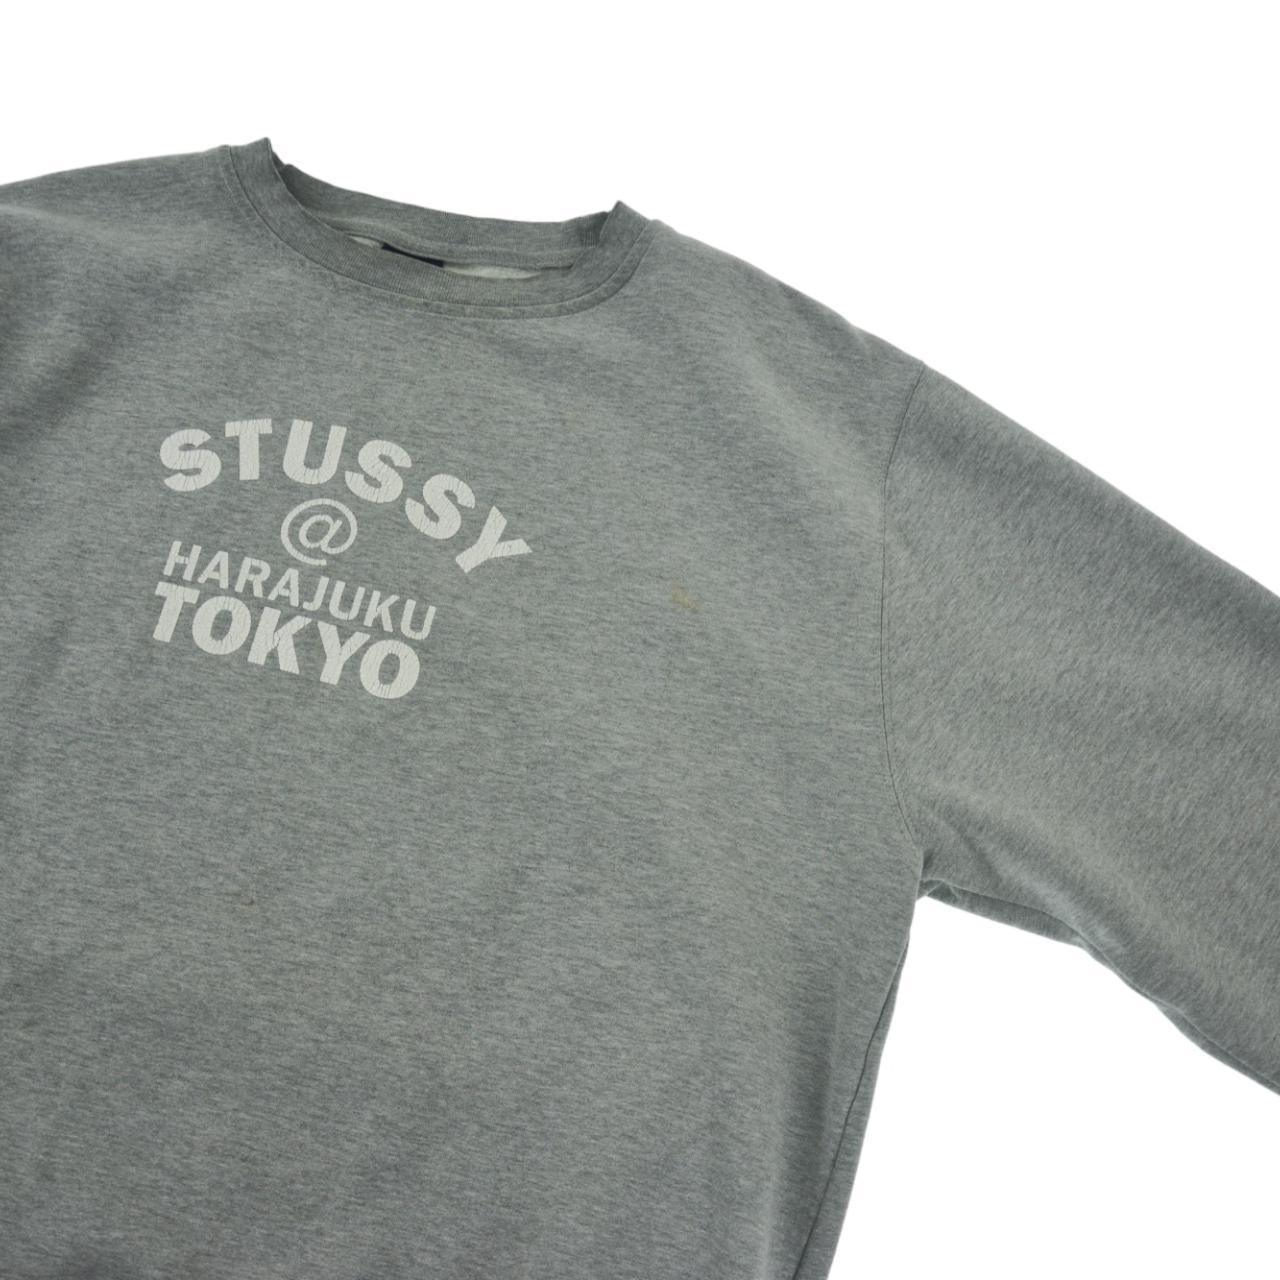 Vintage Stussy Tokyo Harajuku Graphic Sweatshirt Size XL - Known Source